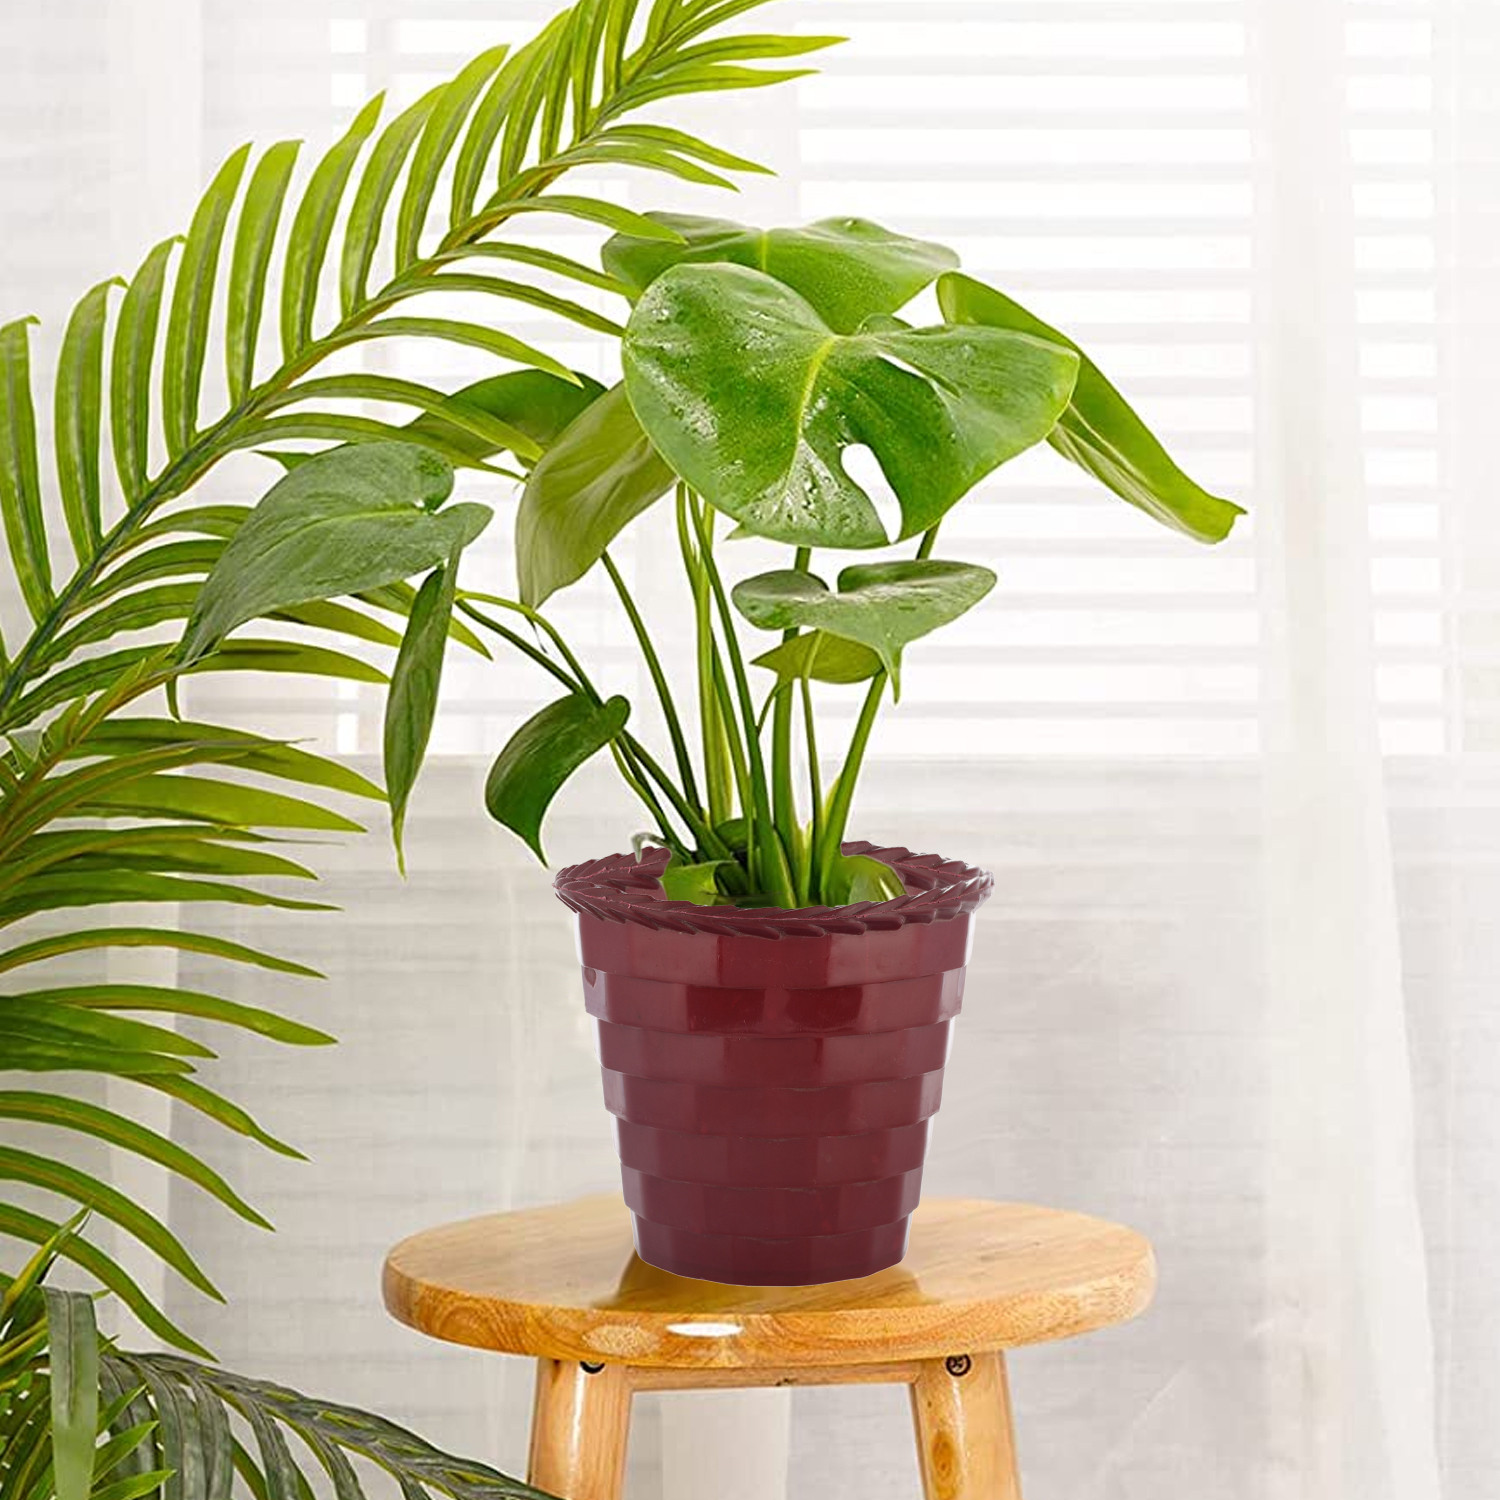 Kuber Industries Brick Flower Pot|Durable Plastic Flower Pots|Planters for Home Décor|Garden|Living Room|Balcony|6 Inch|(Maroon)